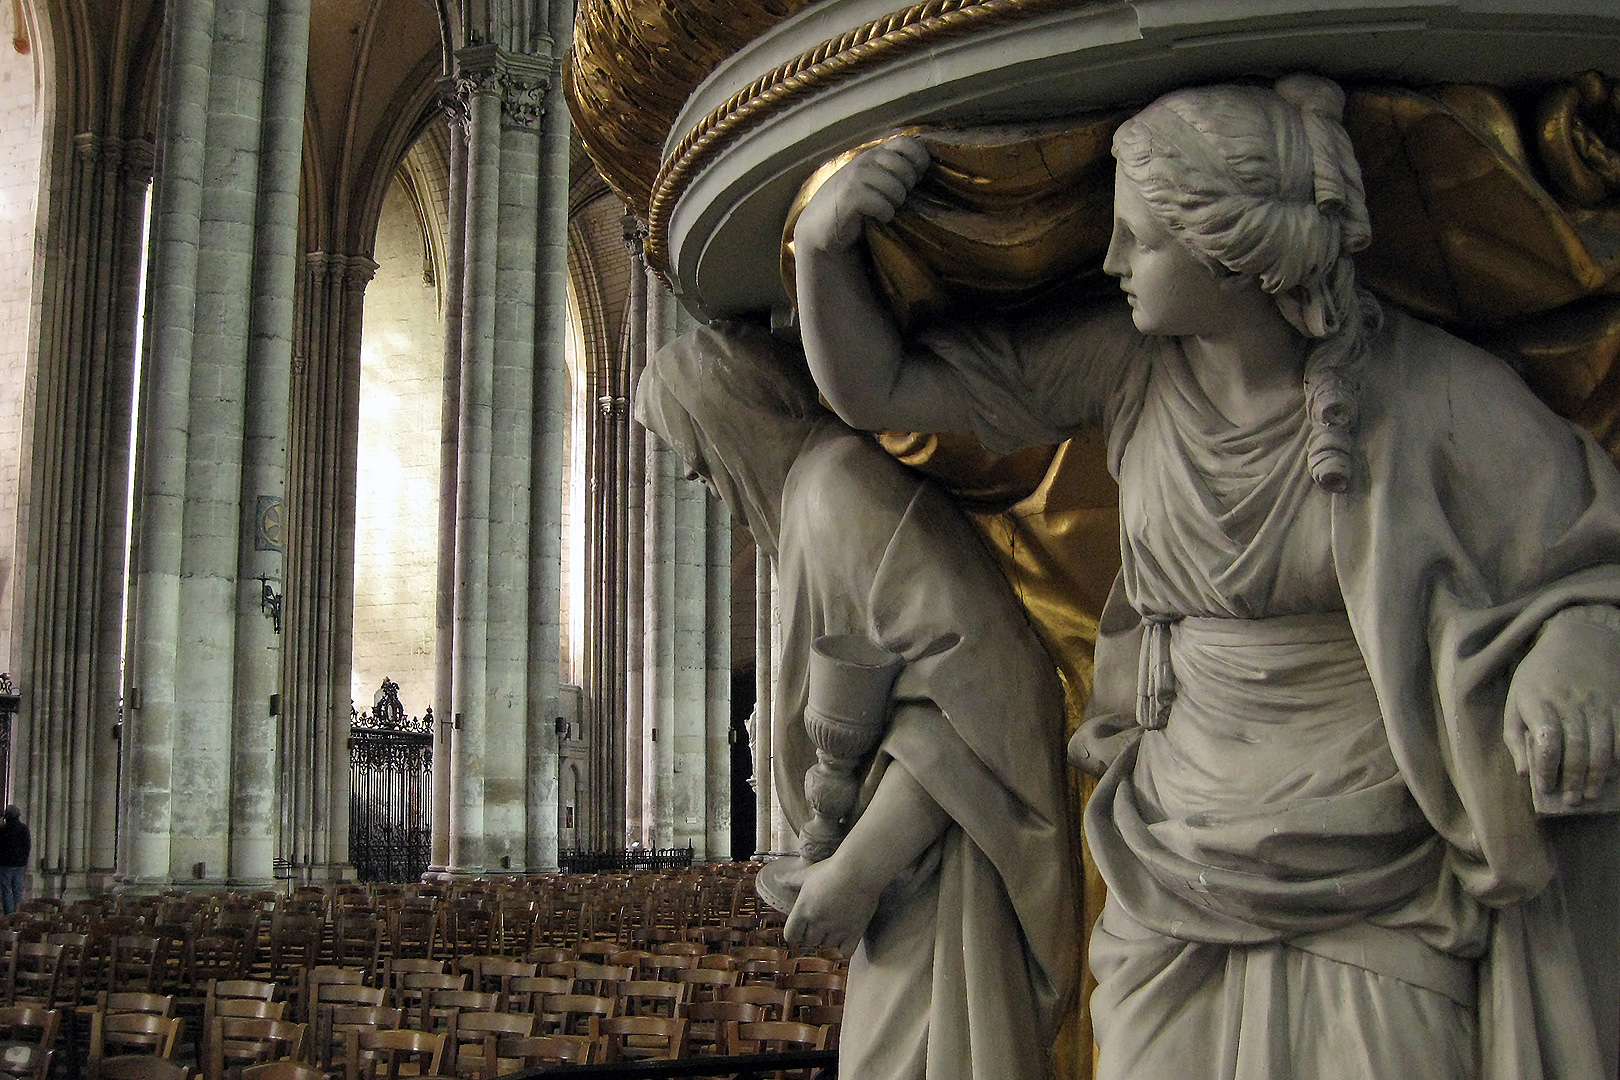 Kathedraal van Amiens (Hauts-de-France, Frankrijk), Amiens Cathedral (Hauts-de-France, France)